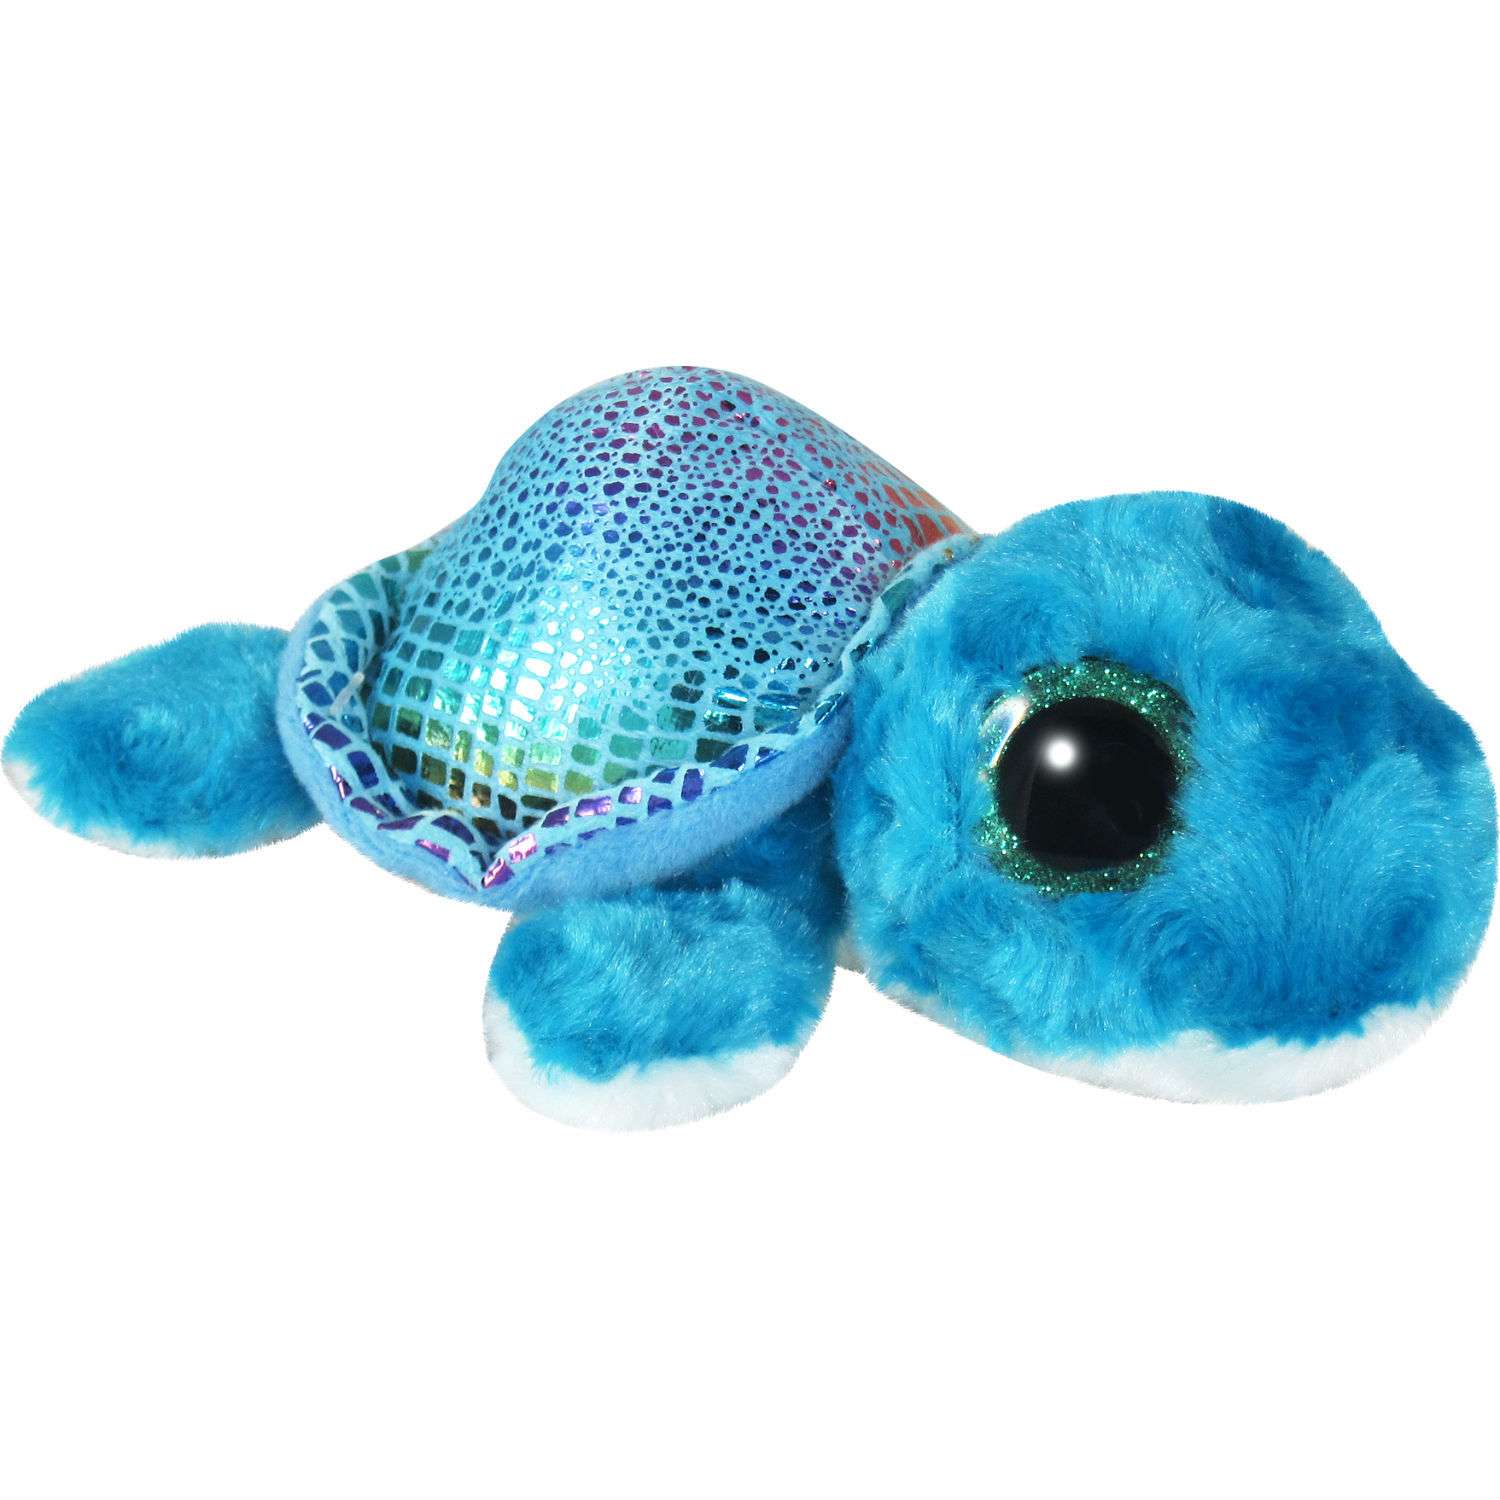 Мягкая игрушка Aurora YOOHOO Голубая черепаха с блестящими элементами - фото 1